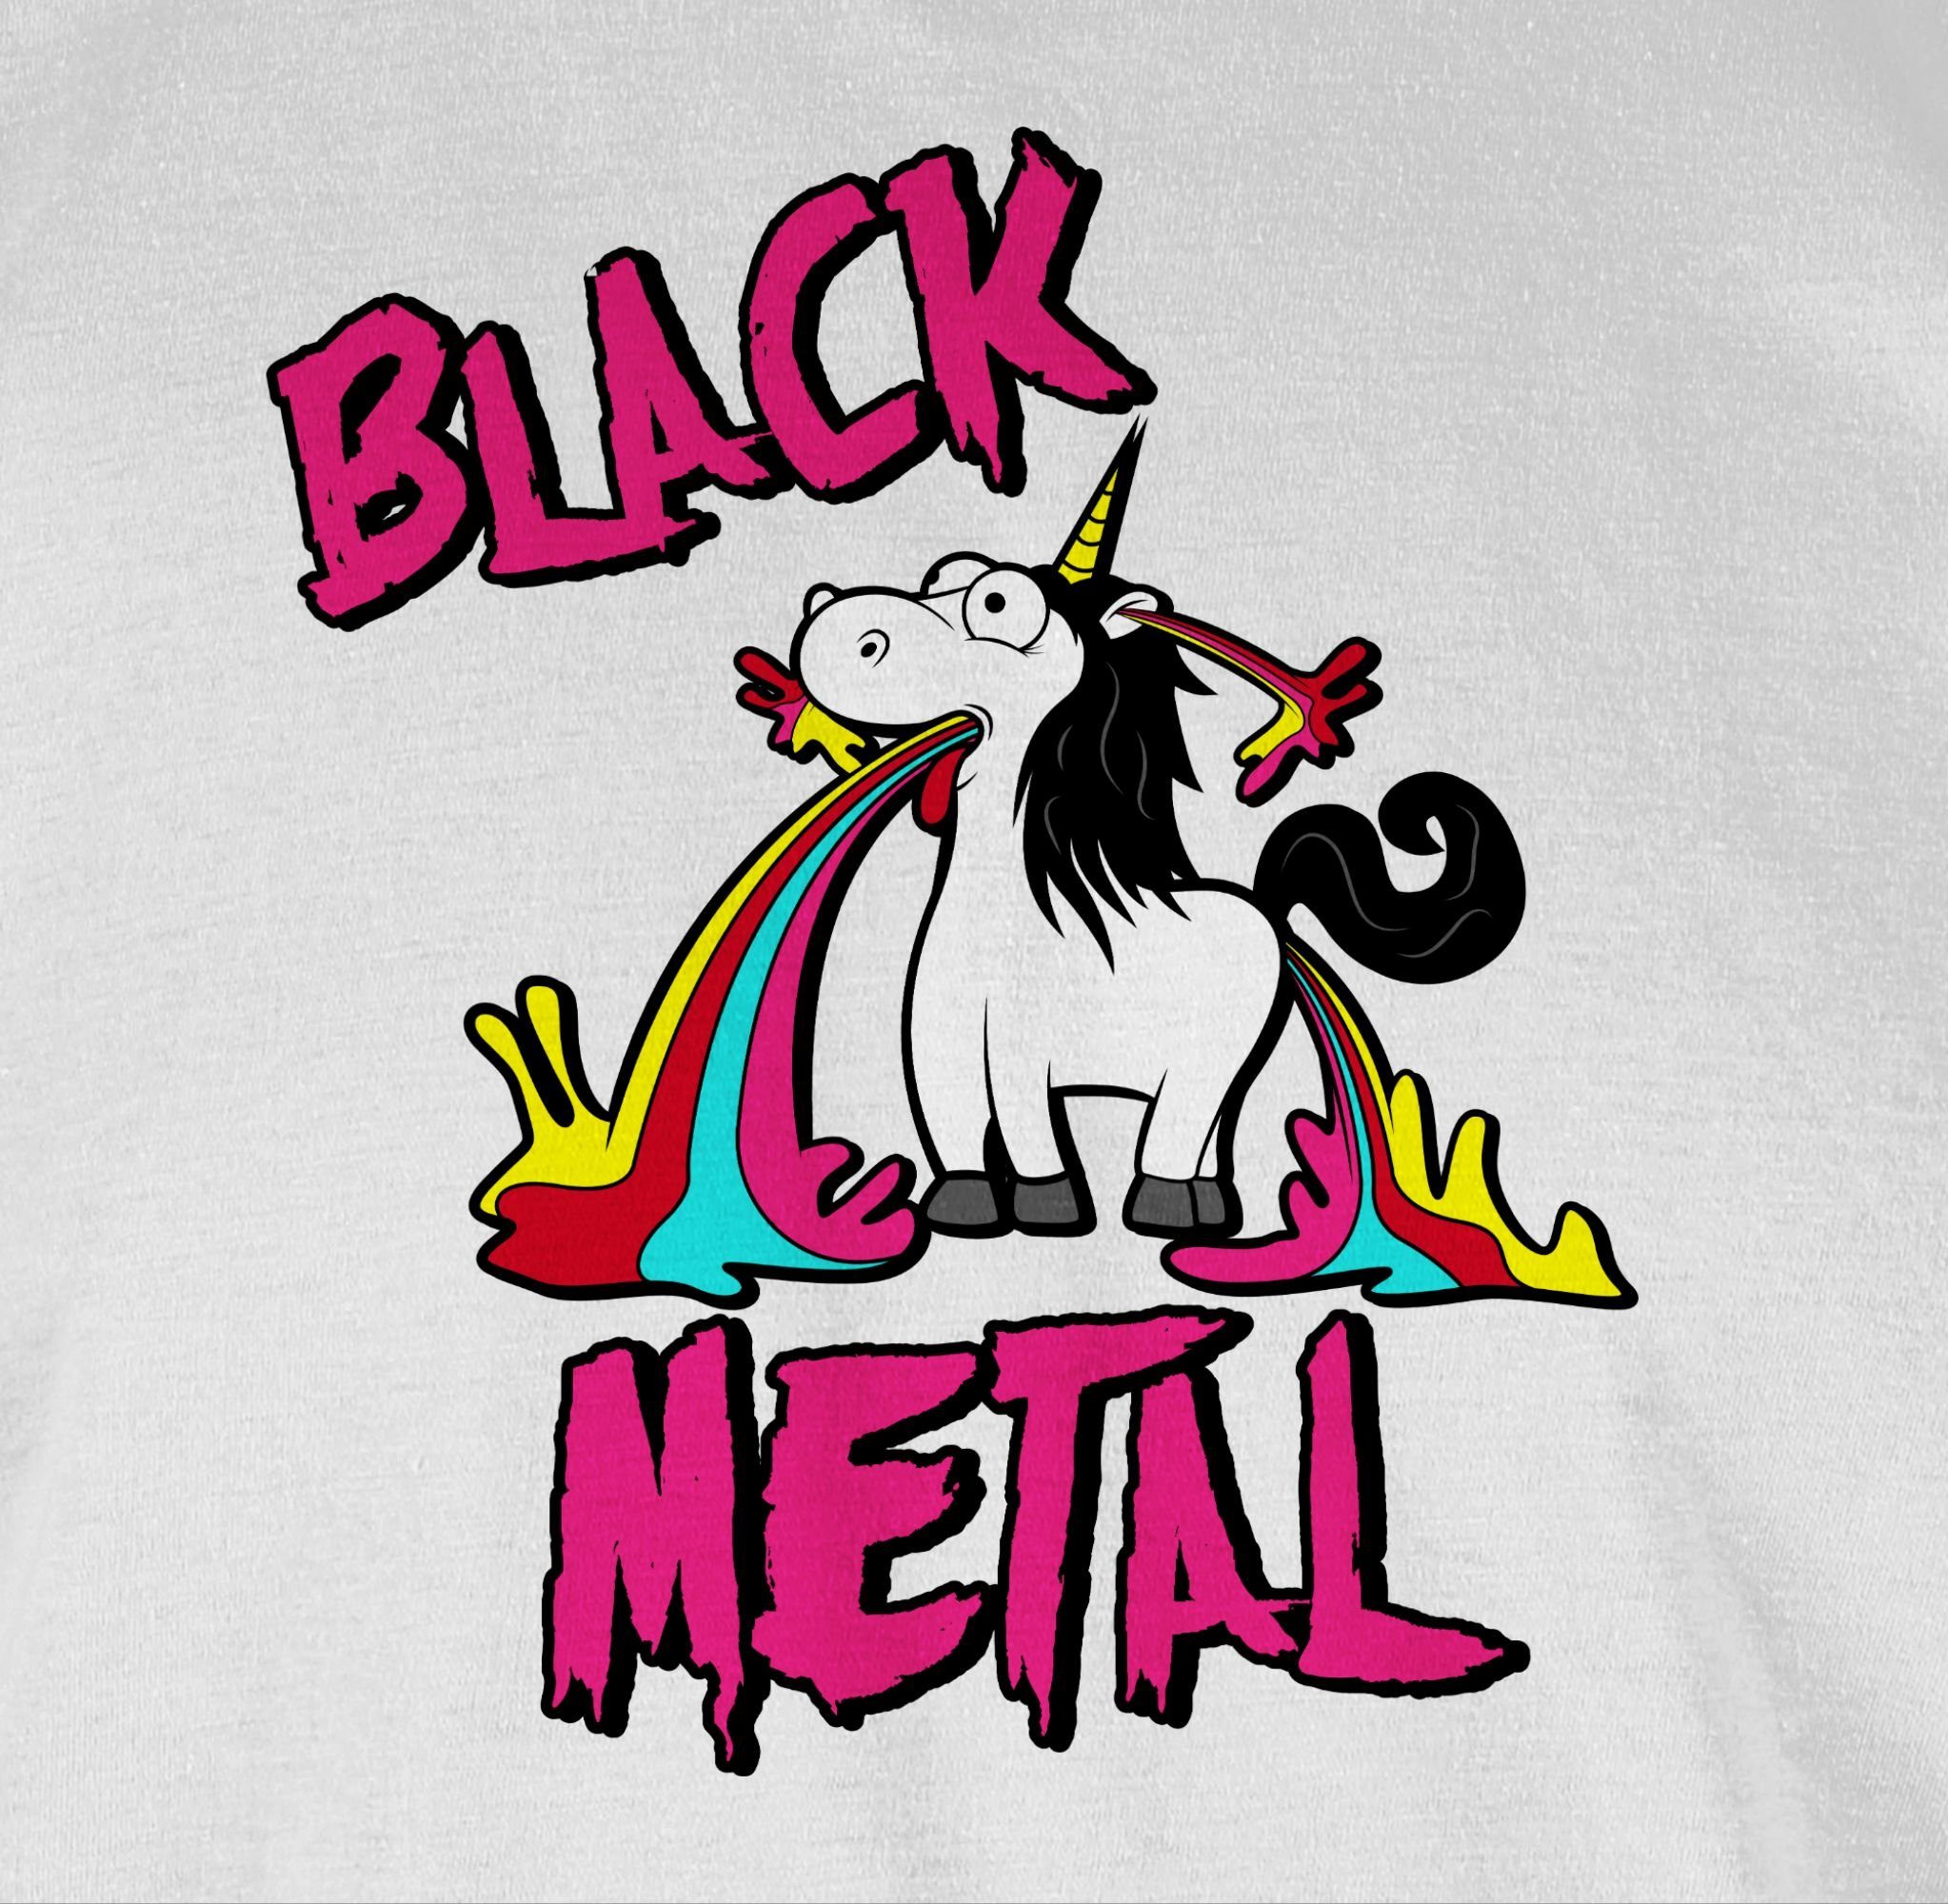 Shirtracer T-Shirt Black Metal Geschenk 3 Einhorn Einhorn Weiß